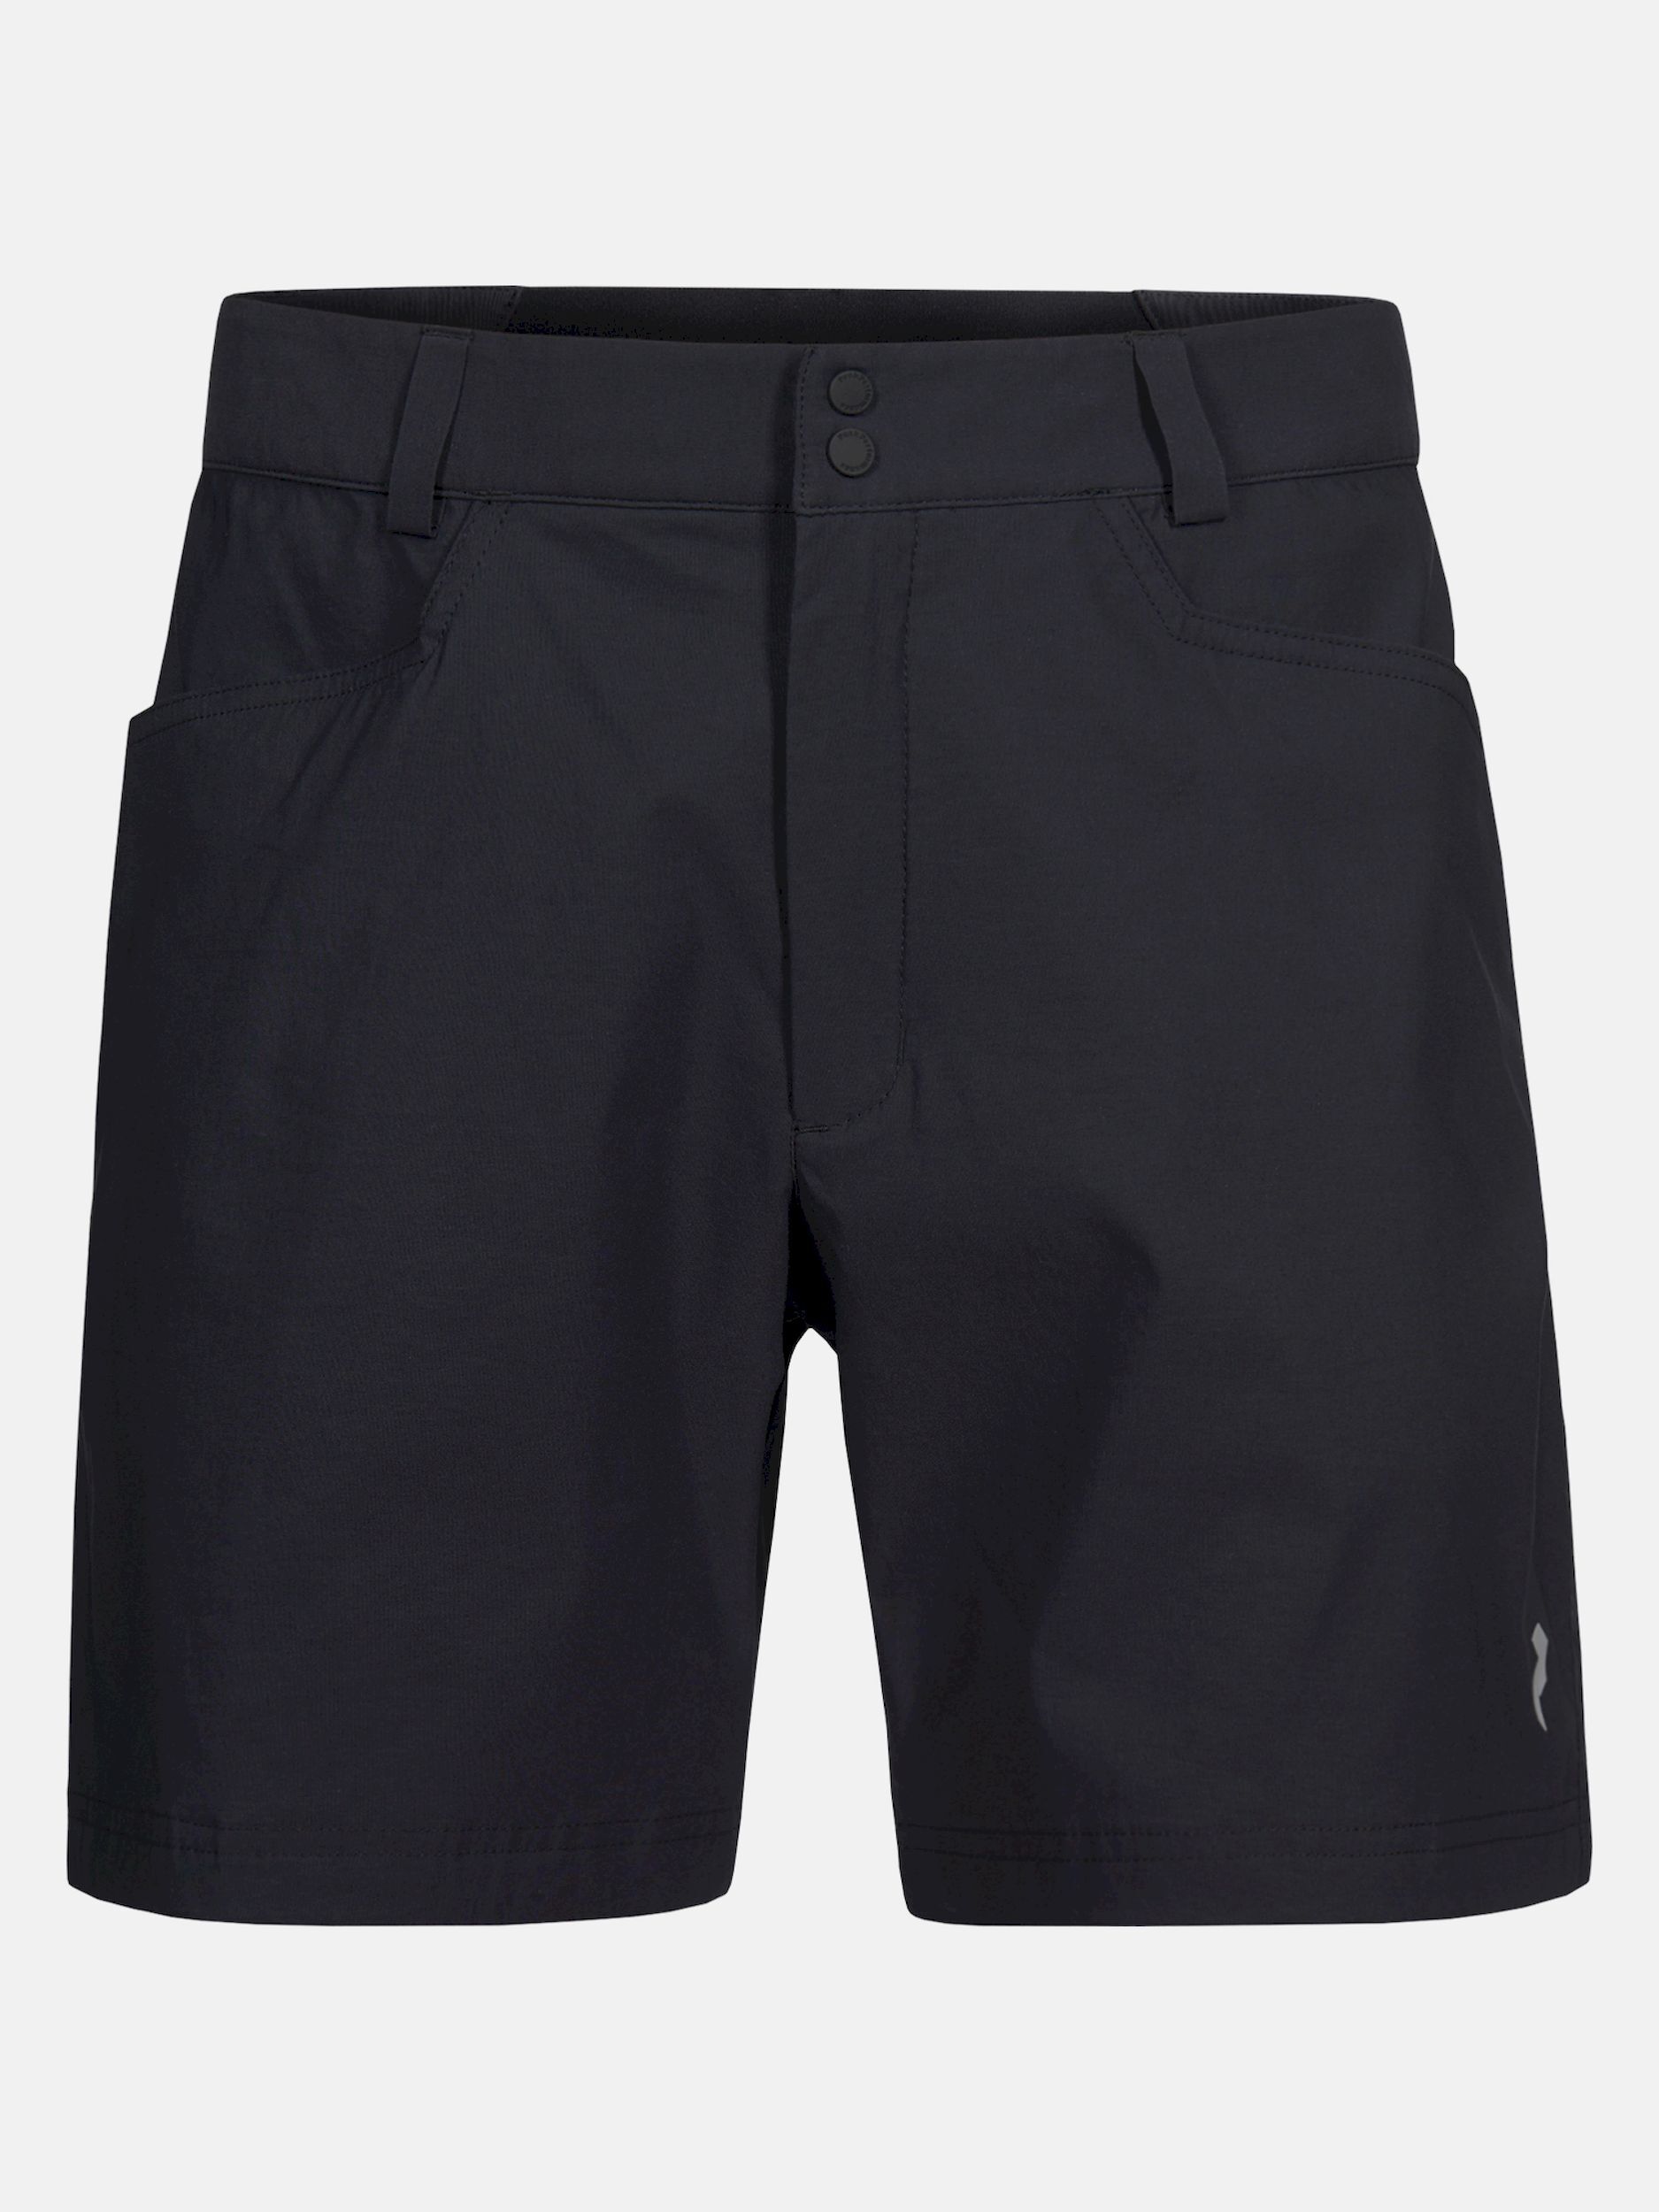 Peak Performance Iconiq Shorts - Pantalones cortos de trekking - Hombre